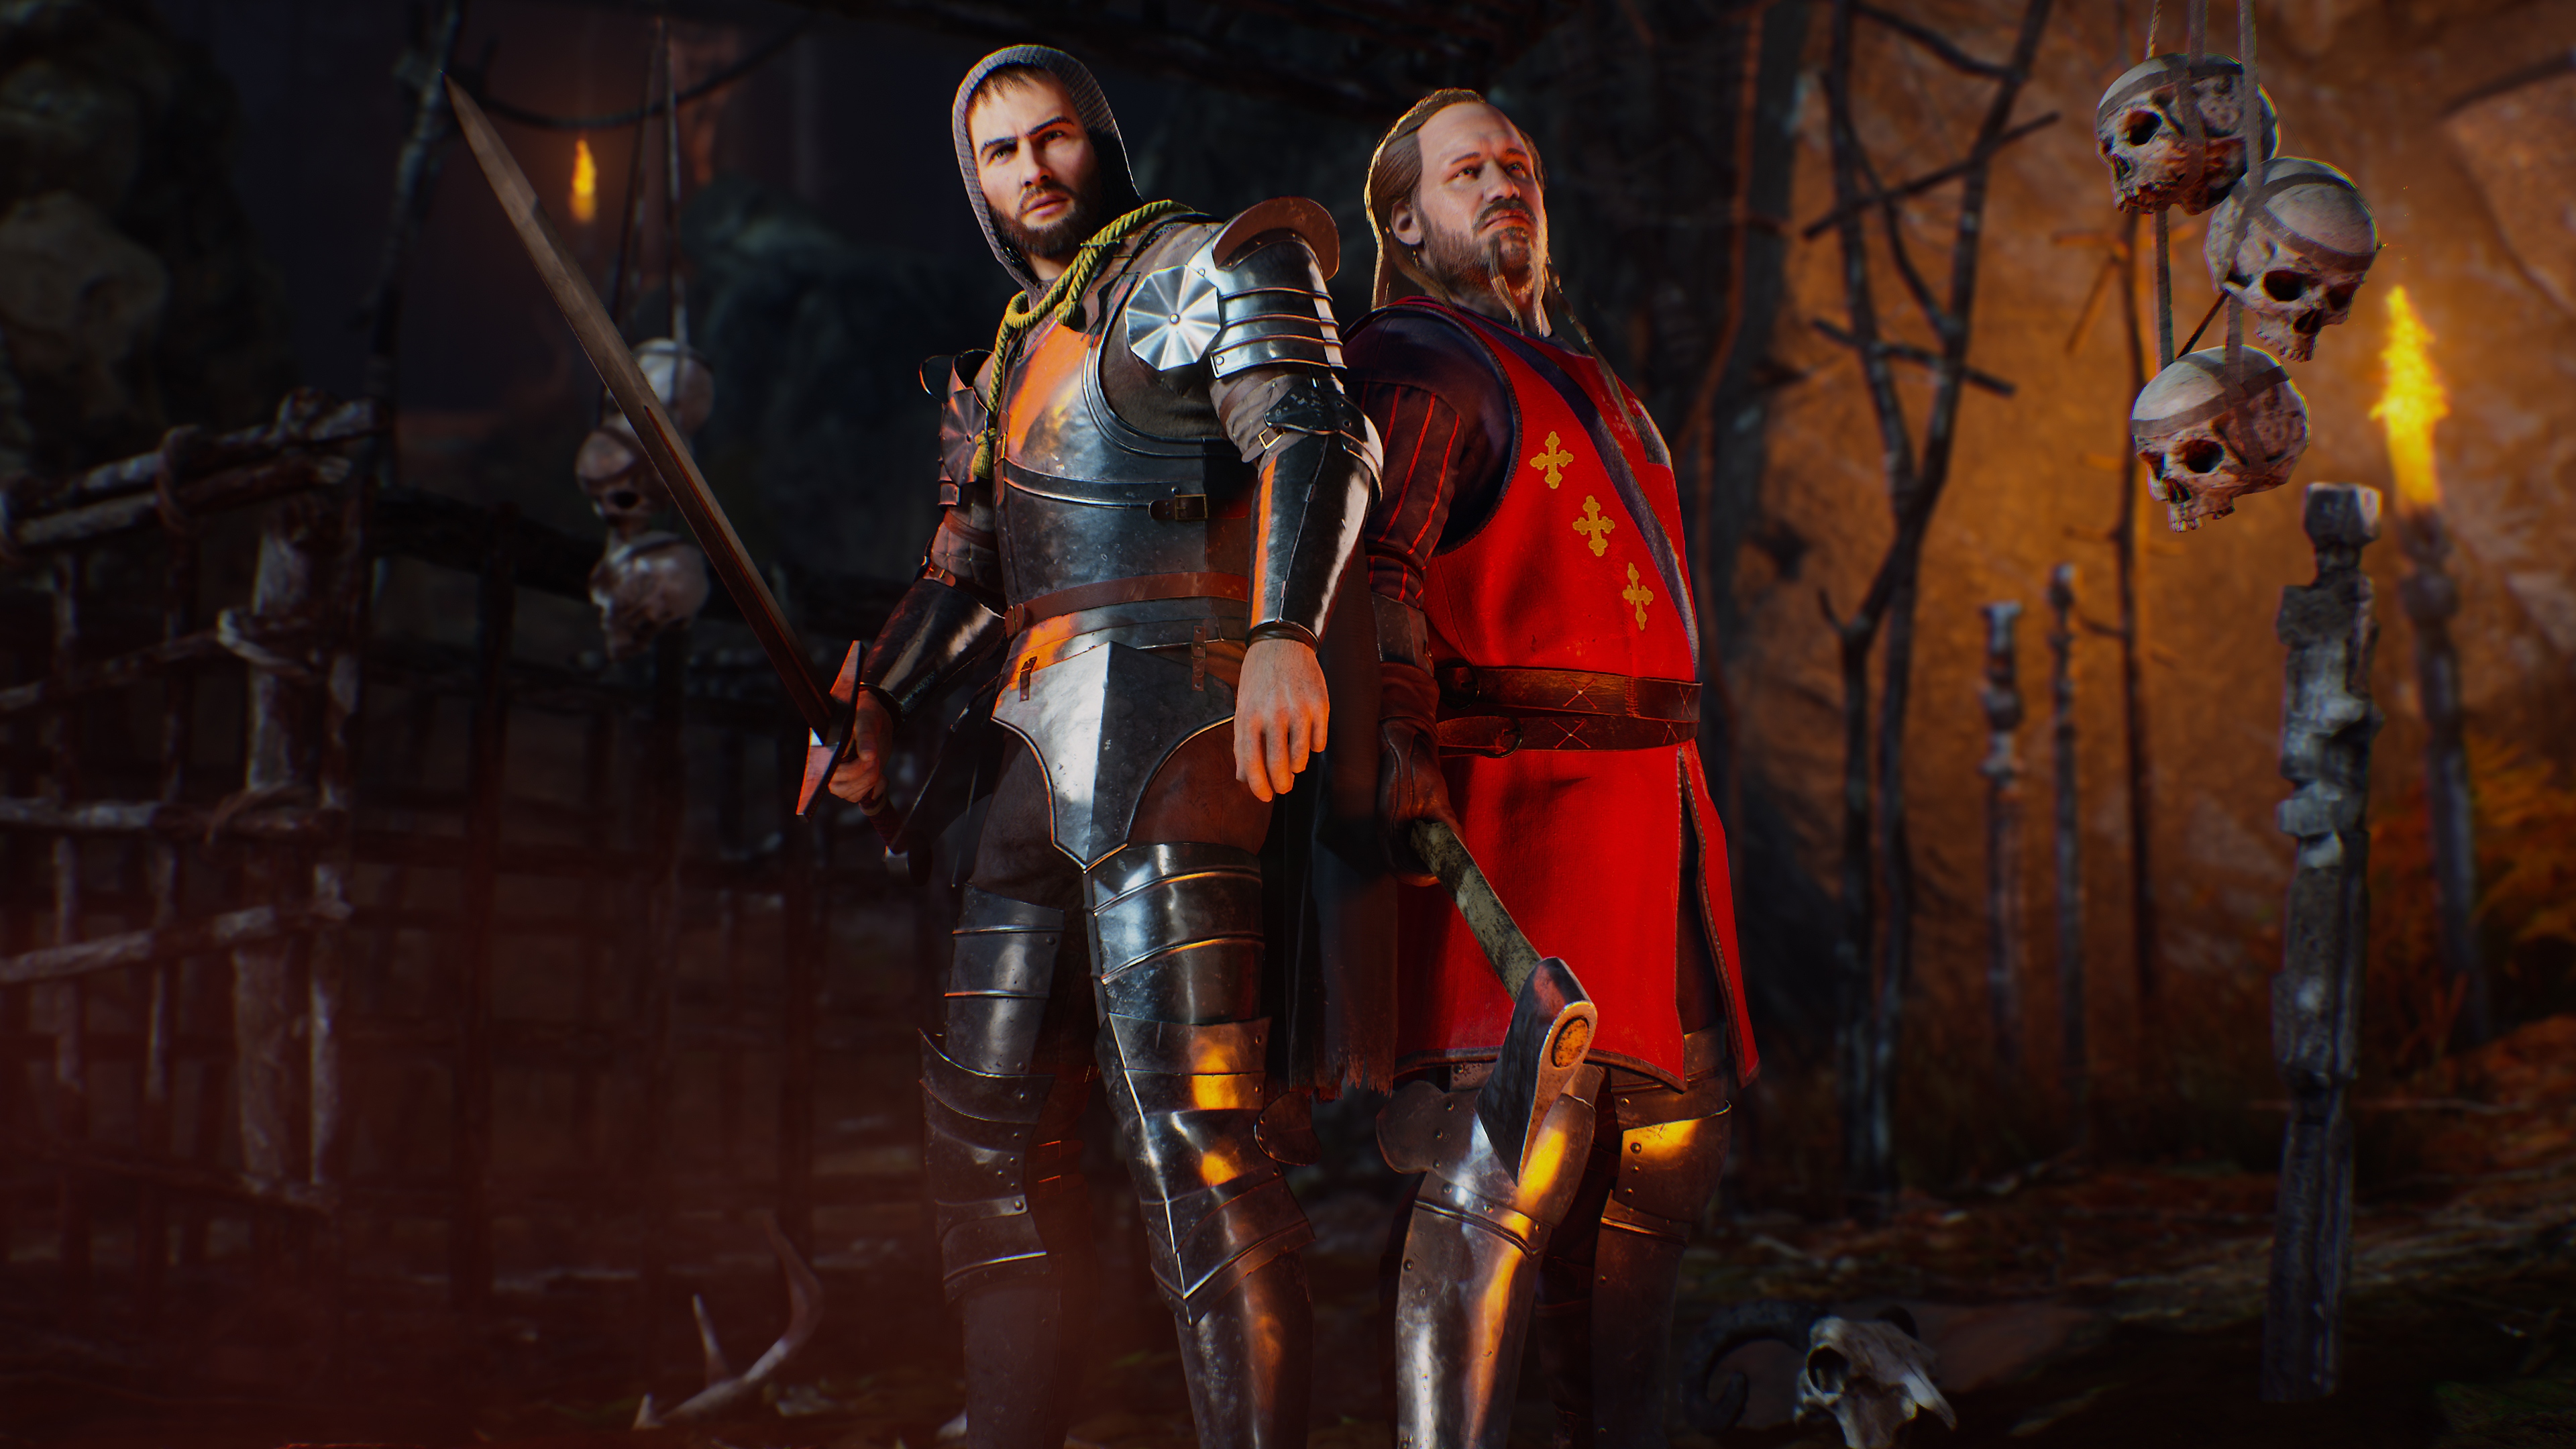 Evil Dead: The Game captura de pantalla que muestra a dos personajes vestidos con atuendos tipo caballero